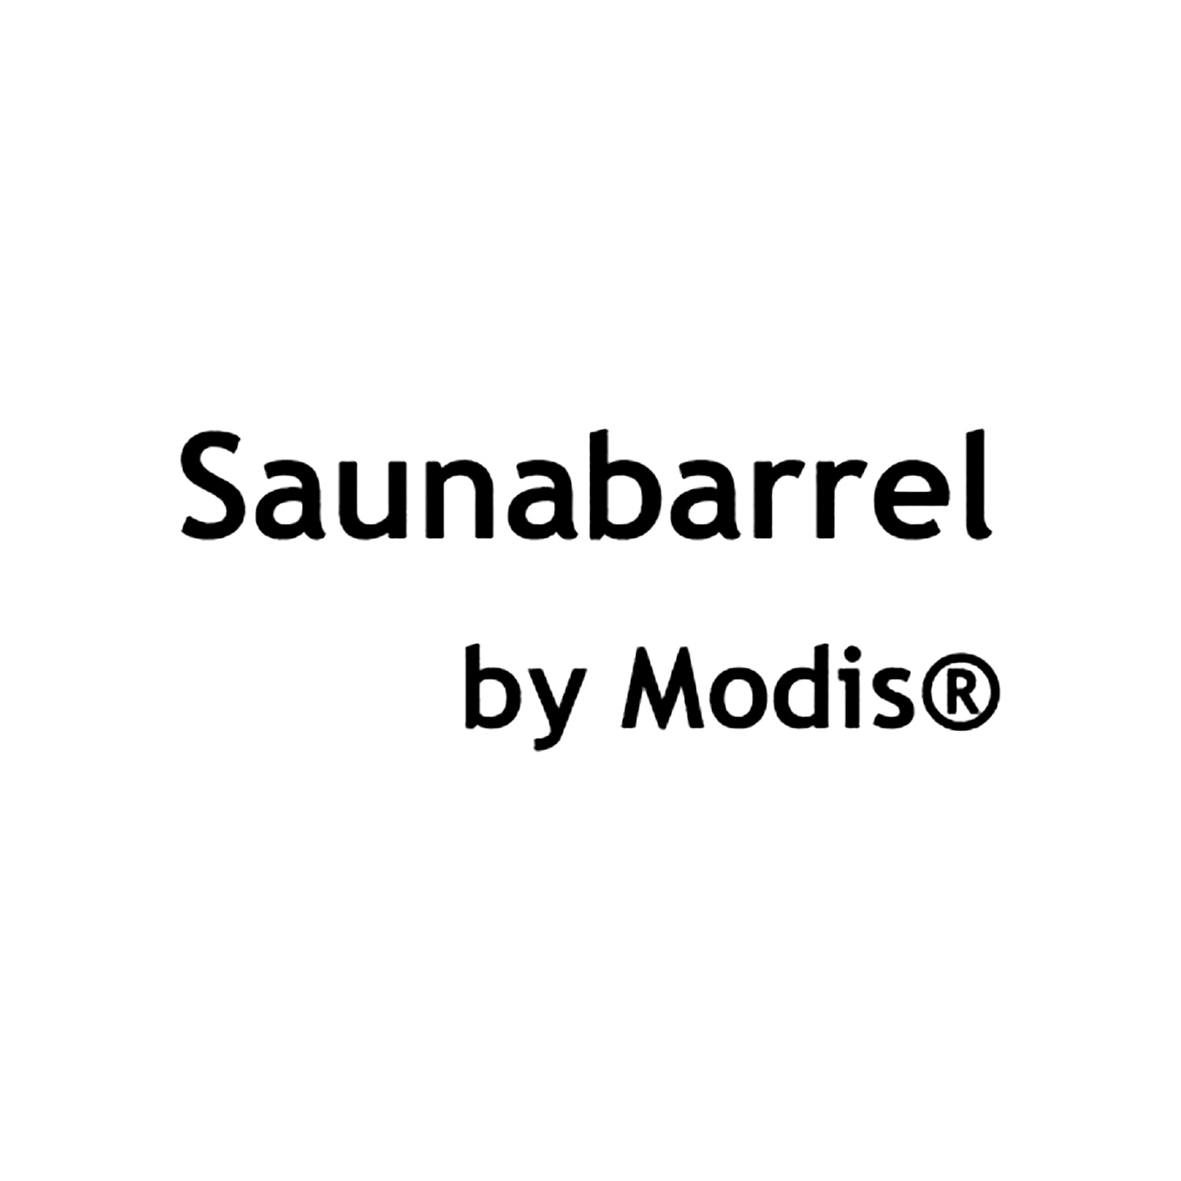 Saunabarrel